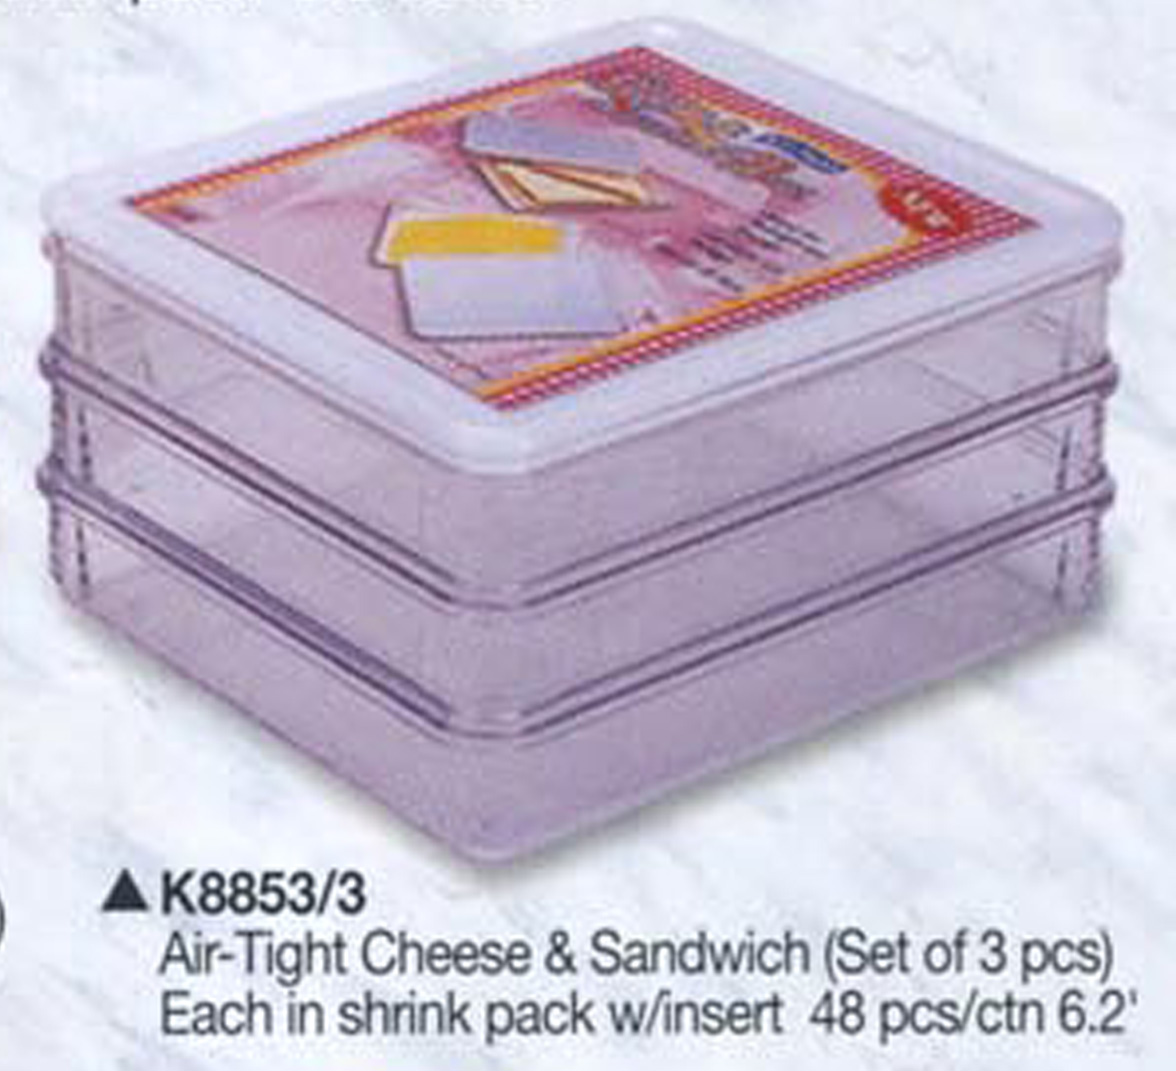 K8853/3 AIR-TIGHT CHEESE & SANDWICH (SET OF 3 PCS)